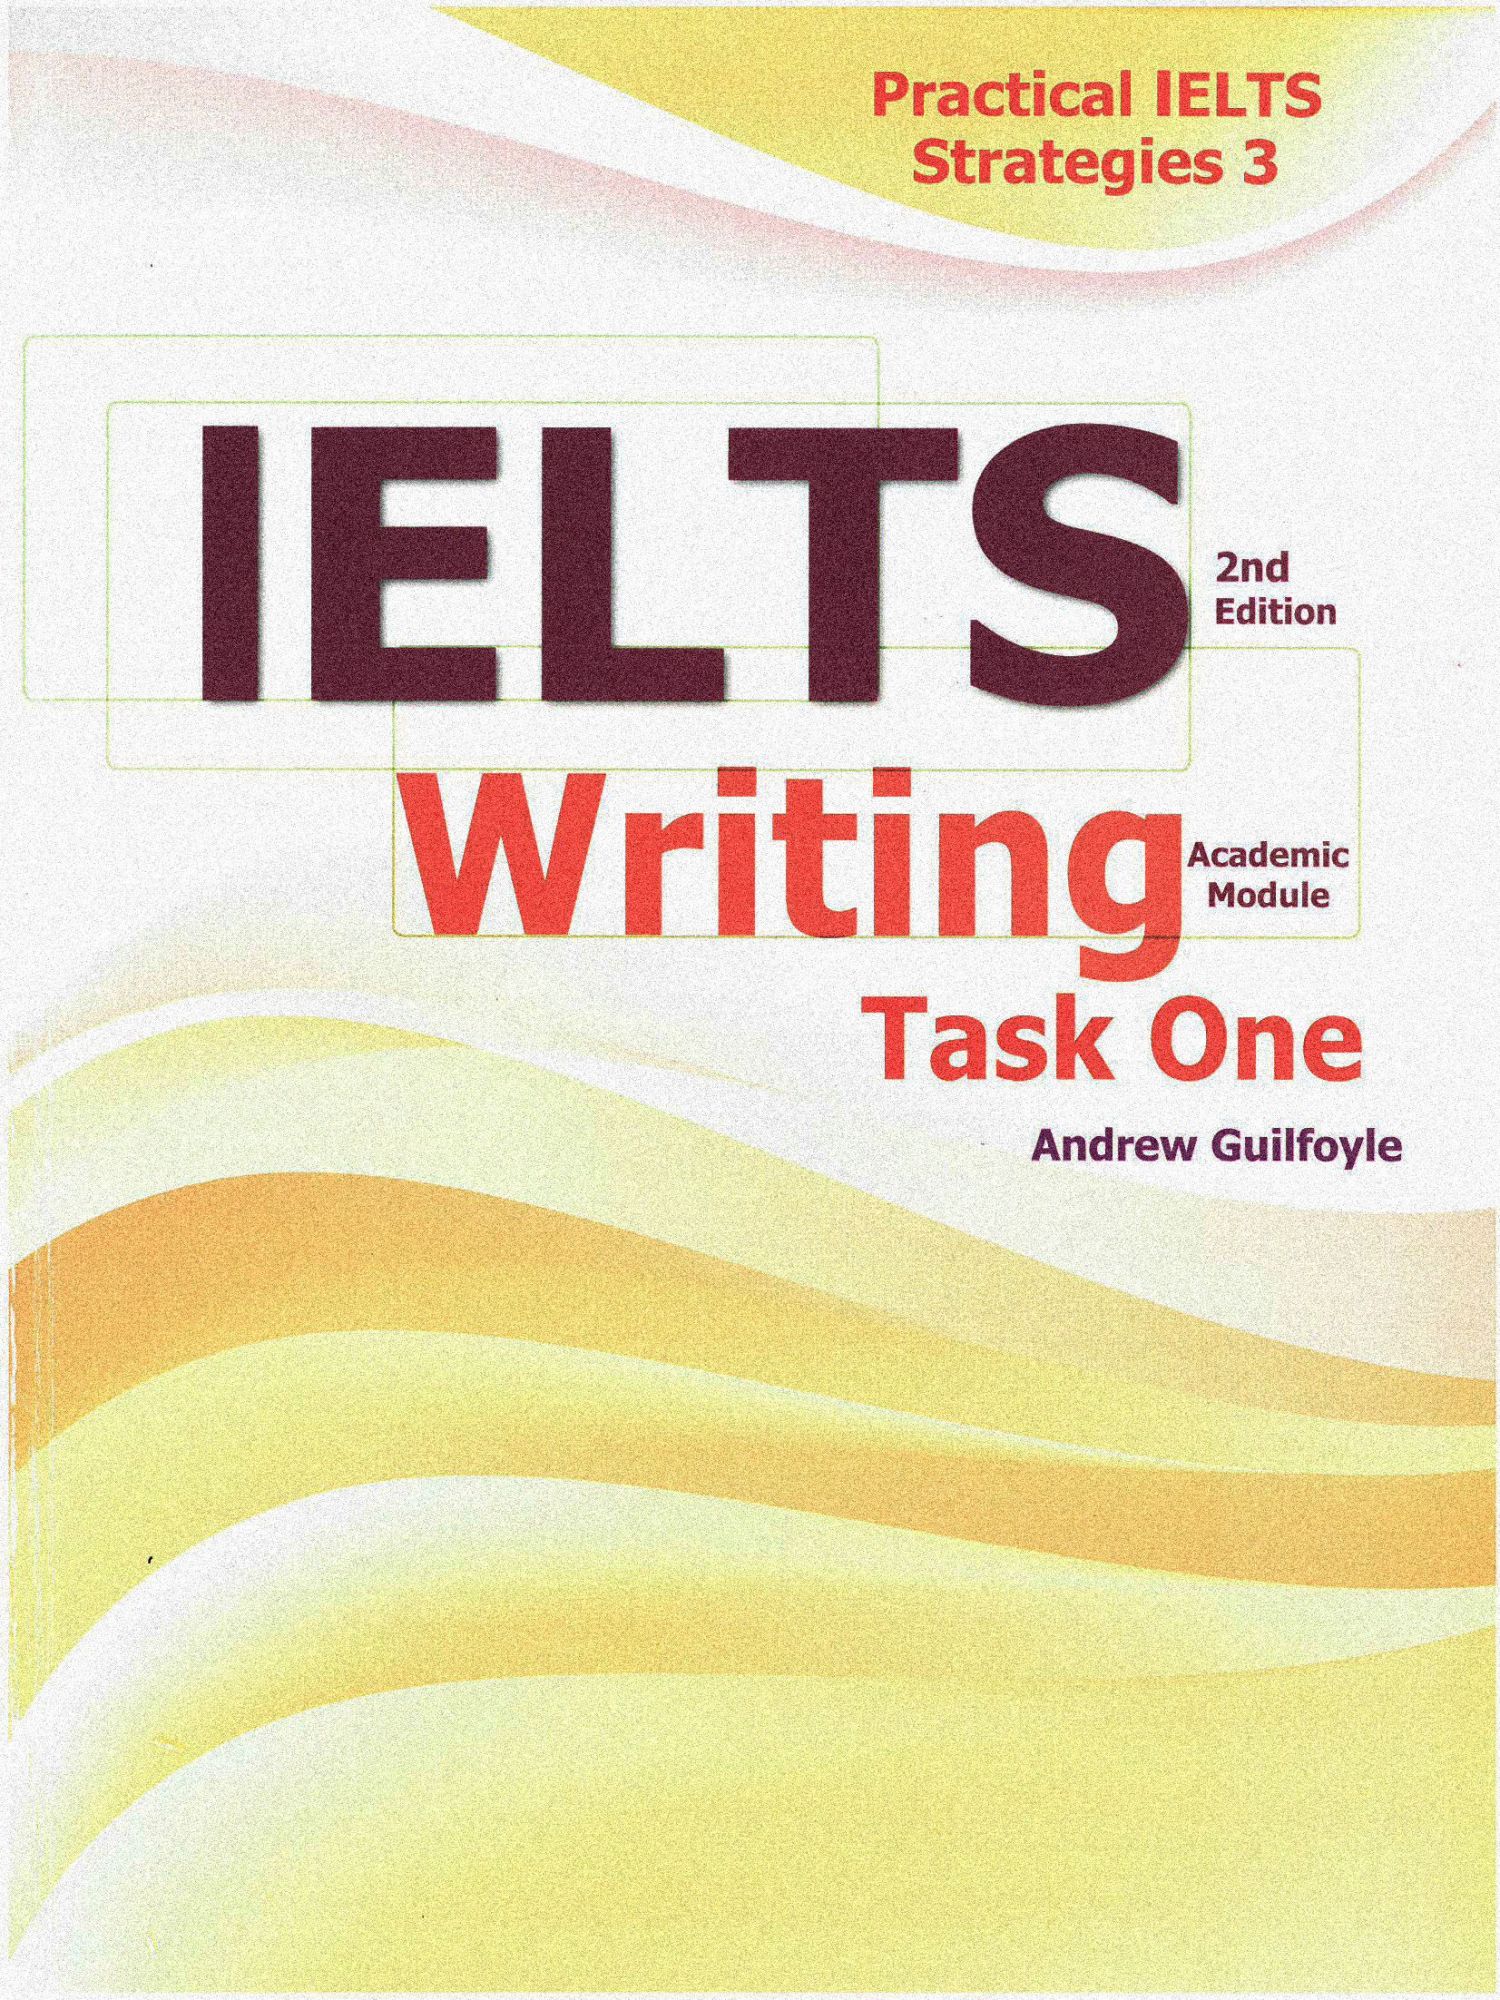 Practical IELTS Strategies 3 - IELTS Writing task 1